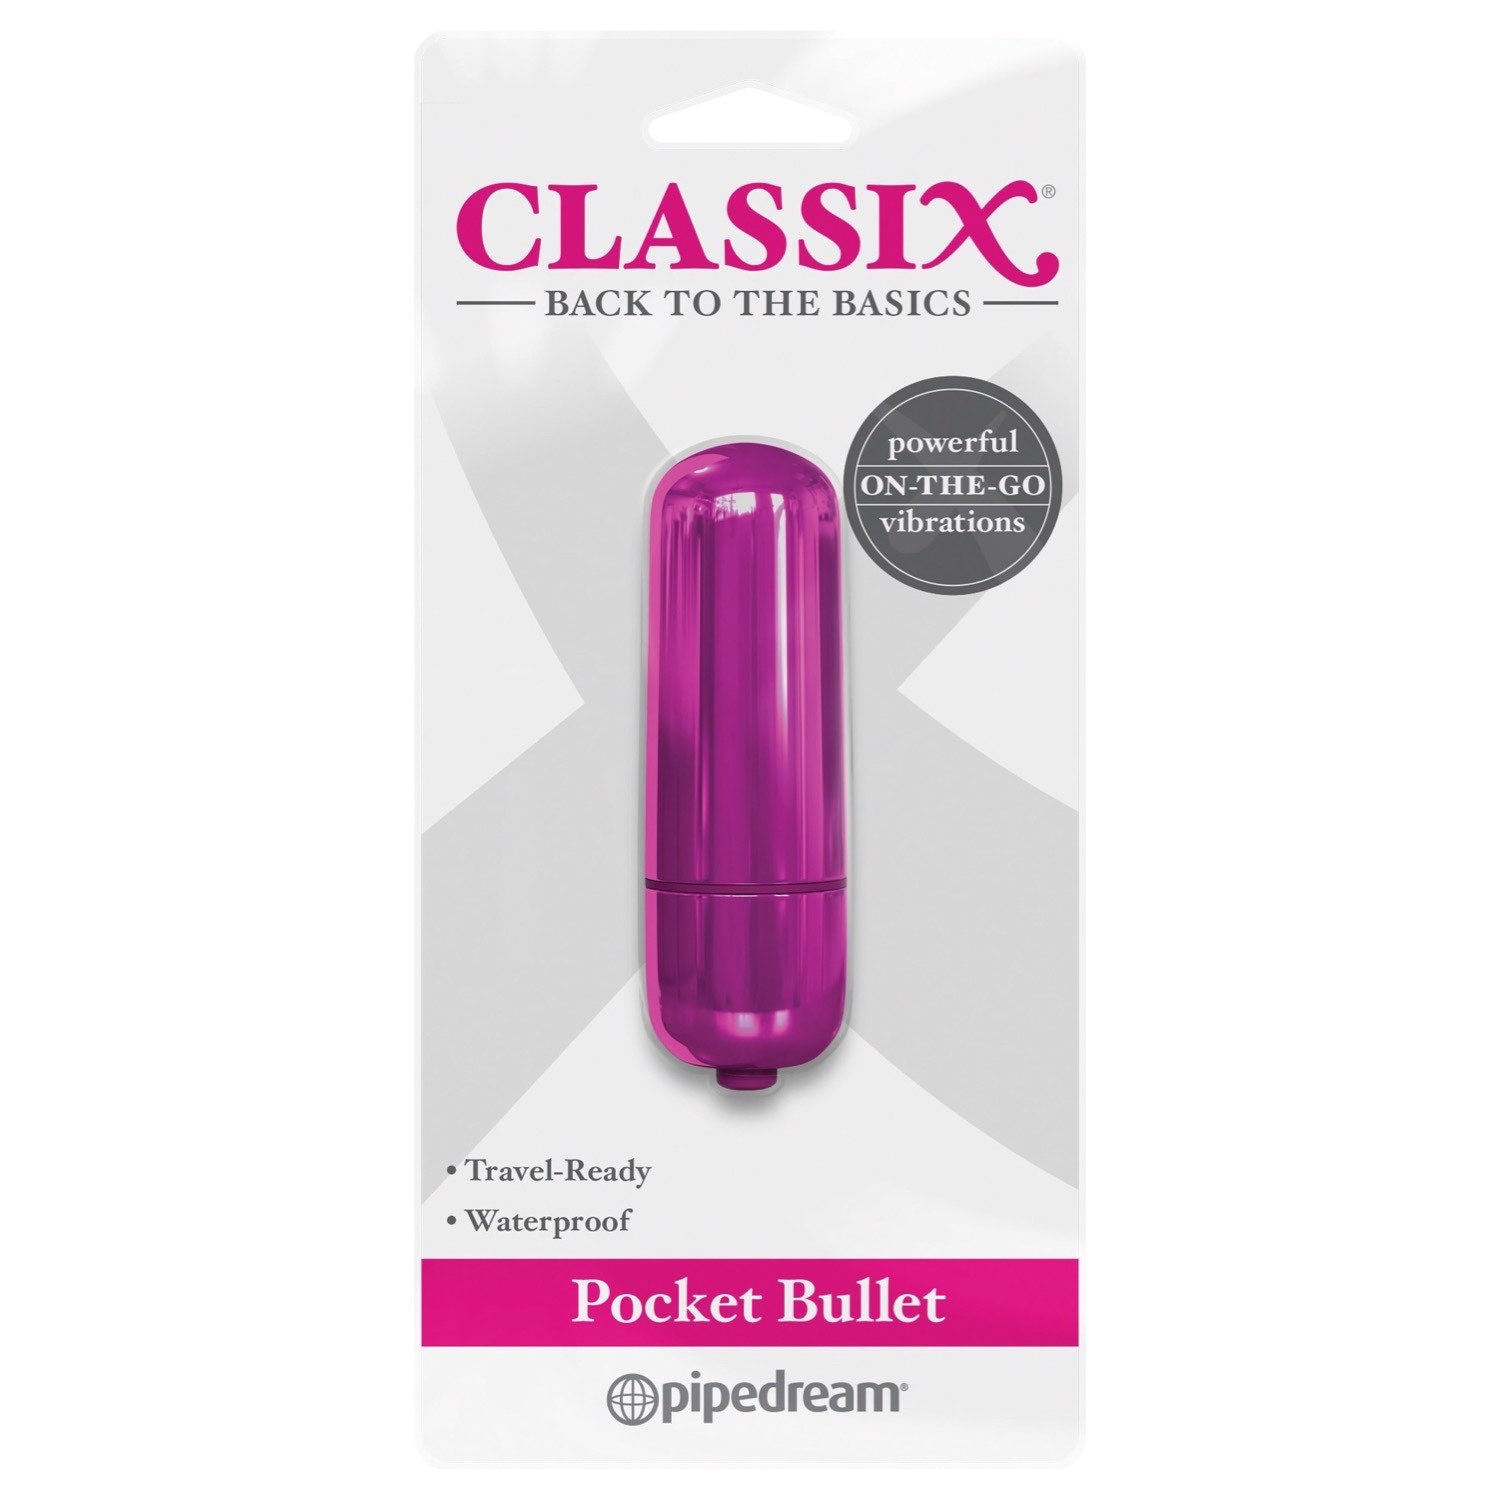 Classix Pocket Bullet - Metallic Pink 5.6 cm Bullet by Pipedream